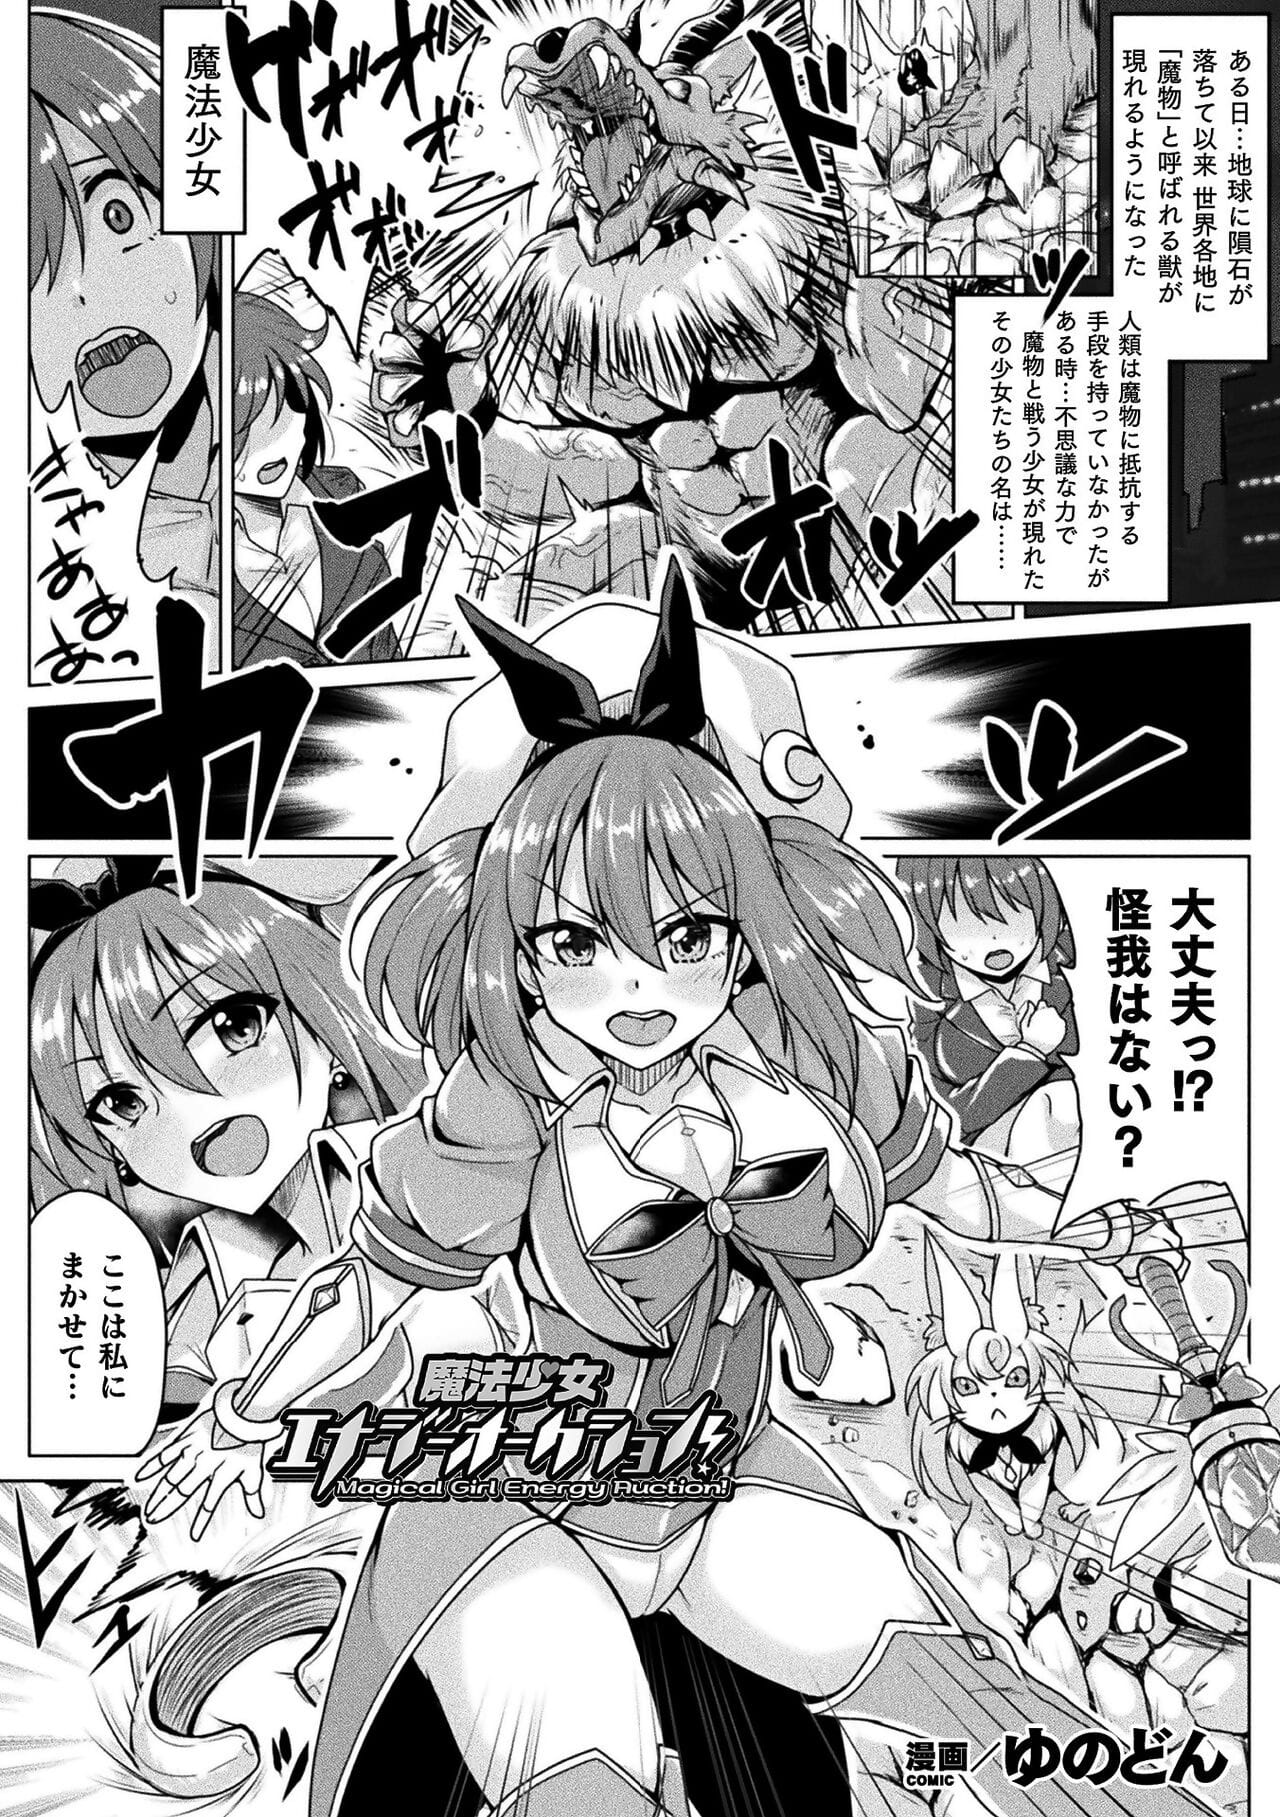 2D Comic Magazine Mahou Shoujo Seidorei Auction e Youkoso! Vol. 2 page 1